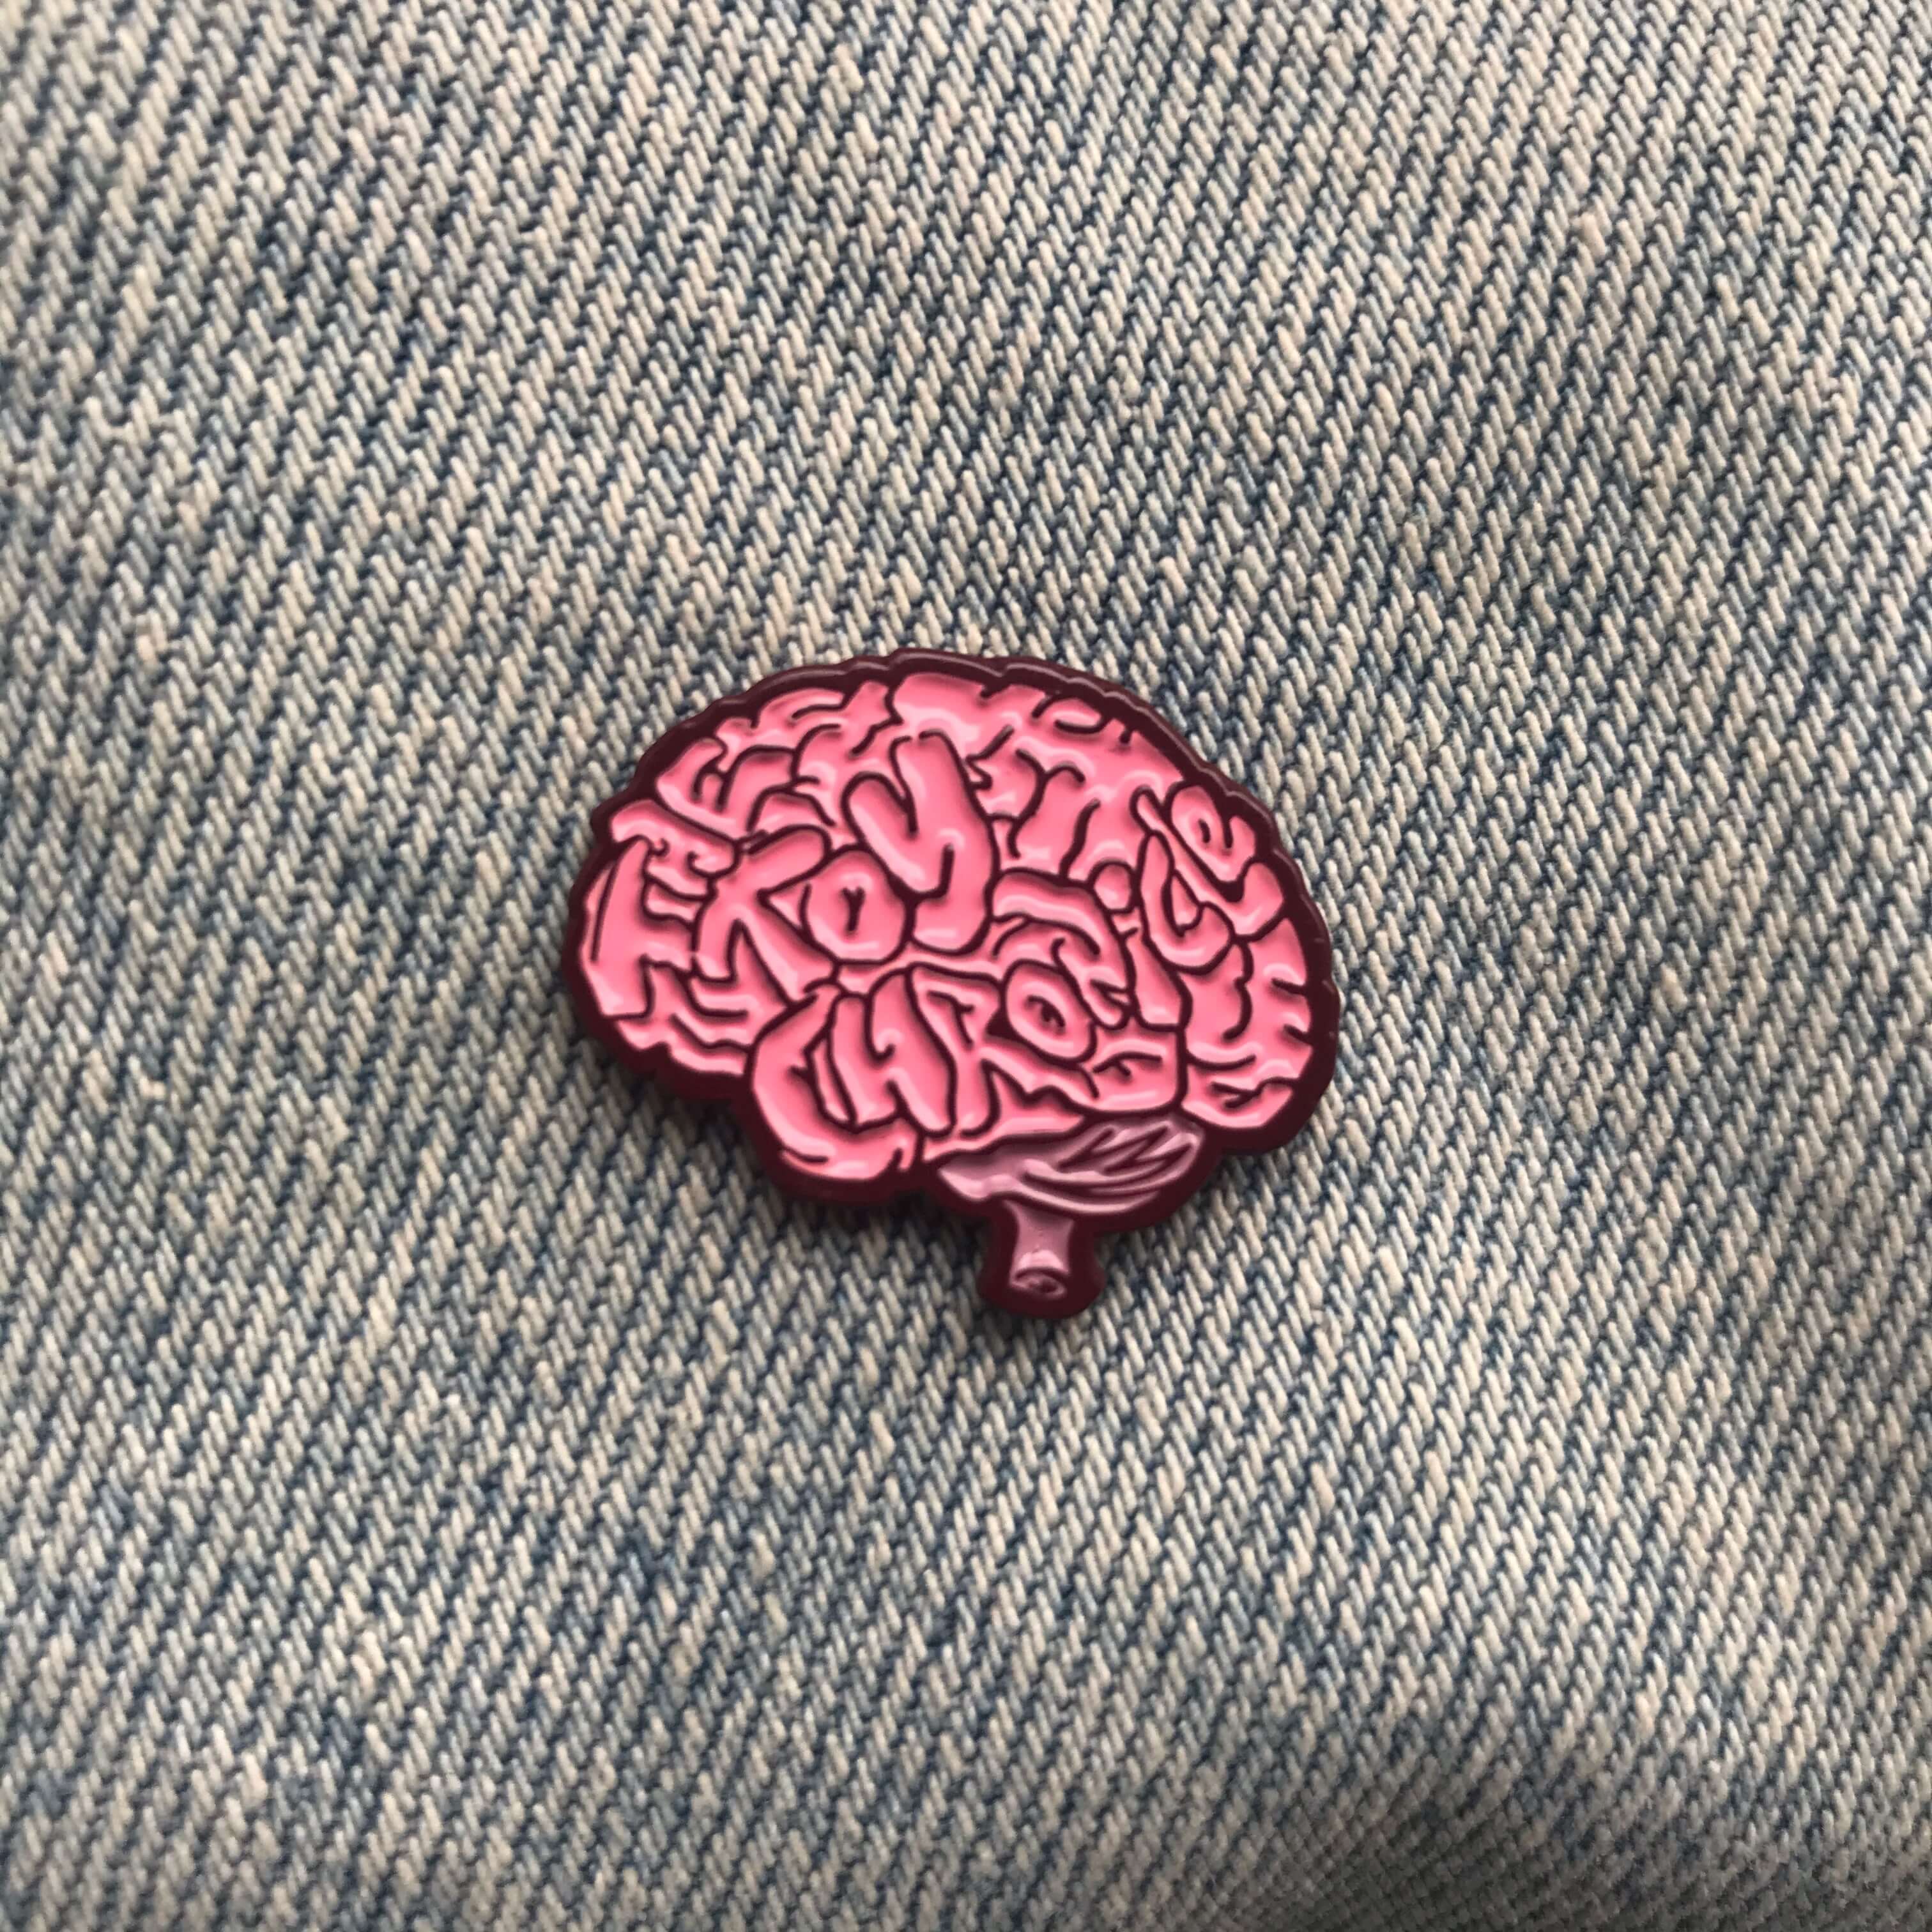 ttc-brain-pin